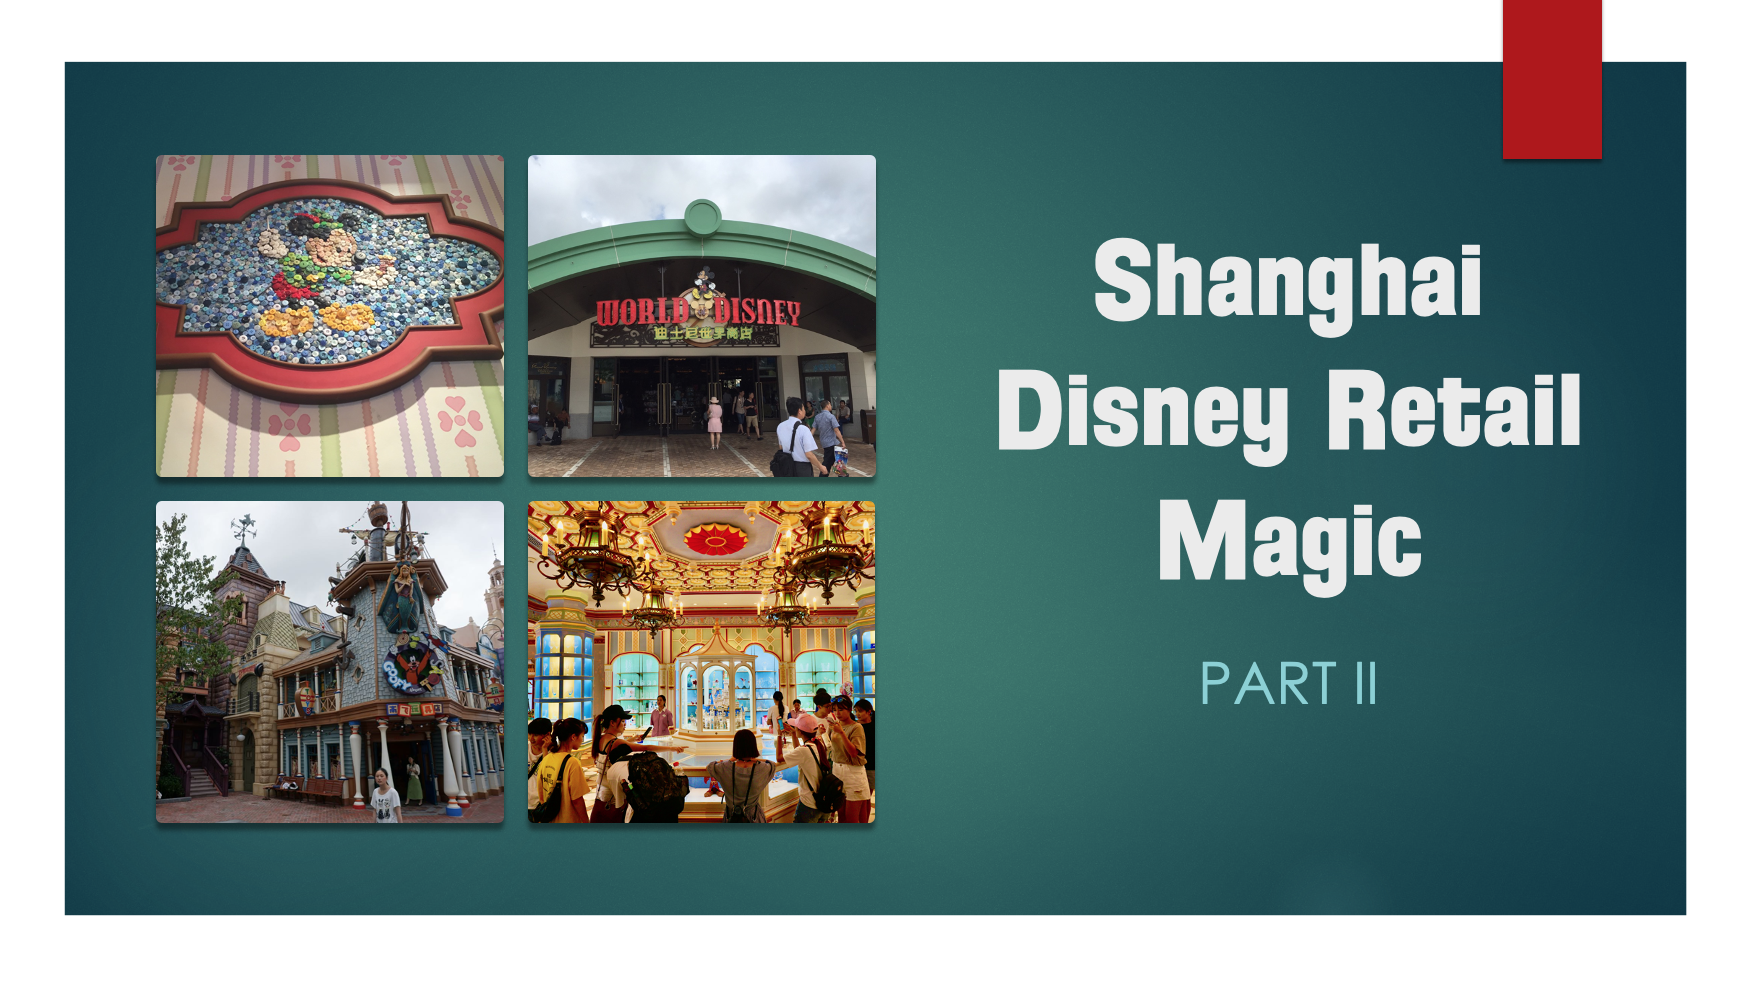 Shanghai Disney Retail Magic: Part II